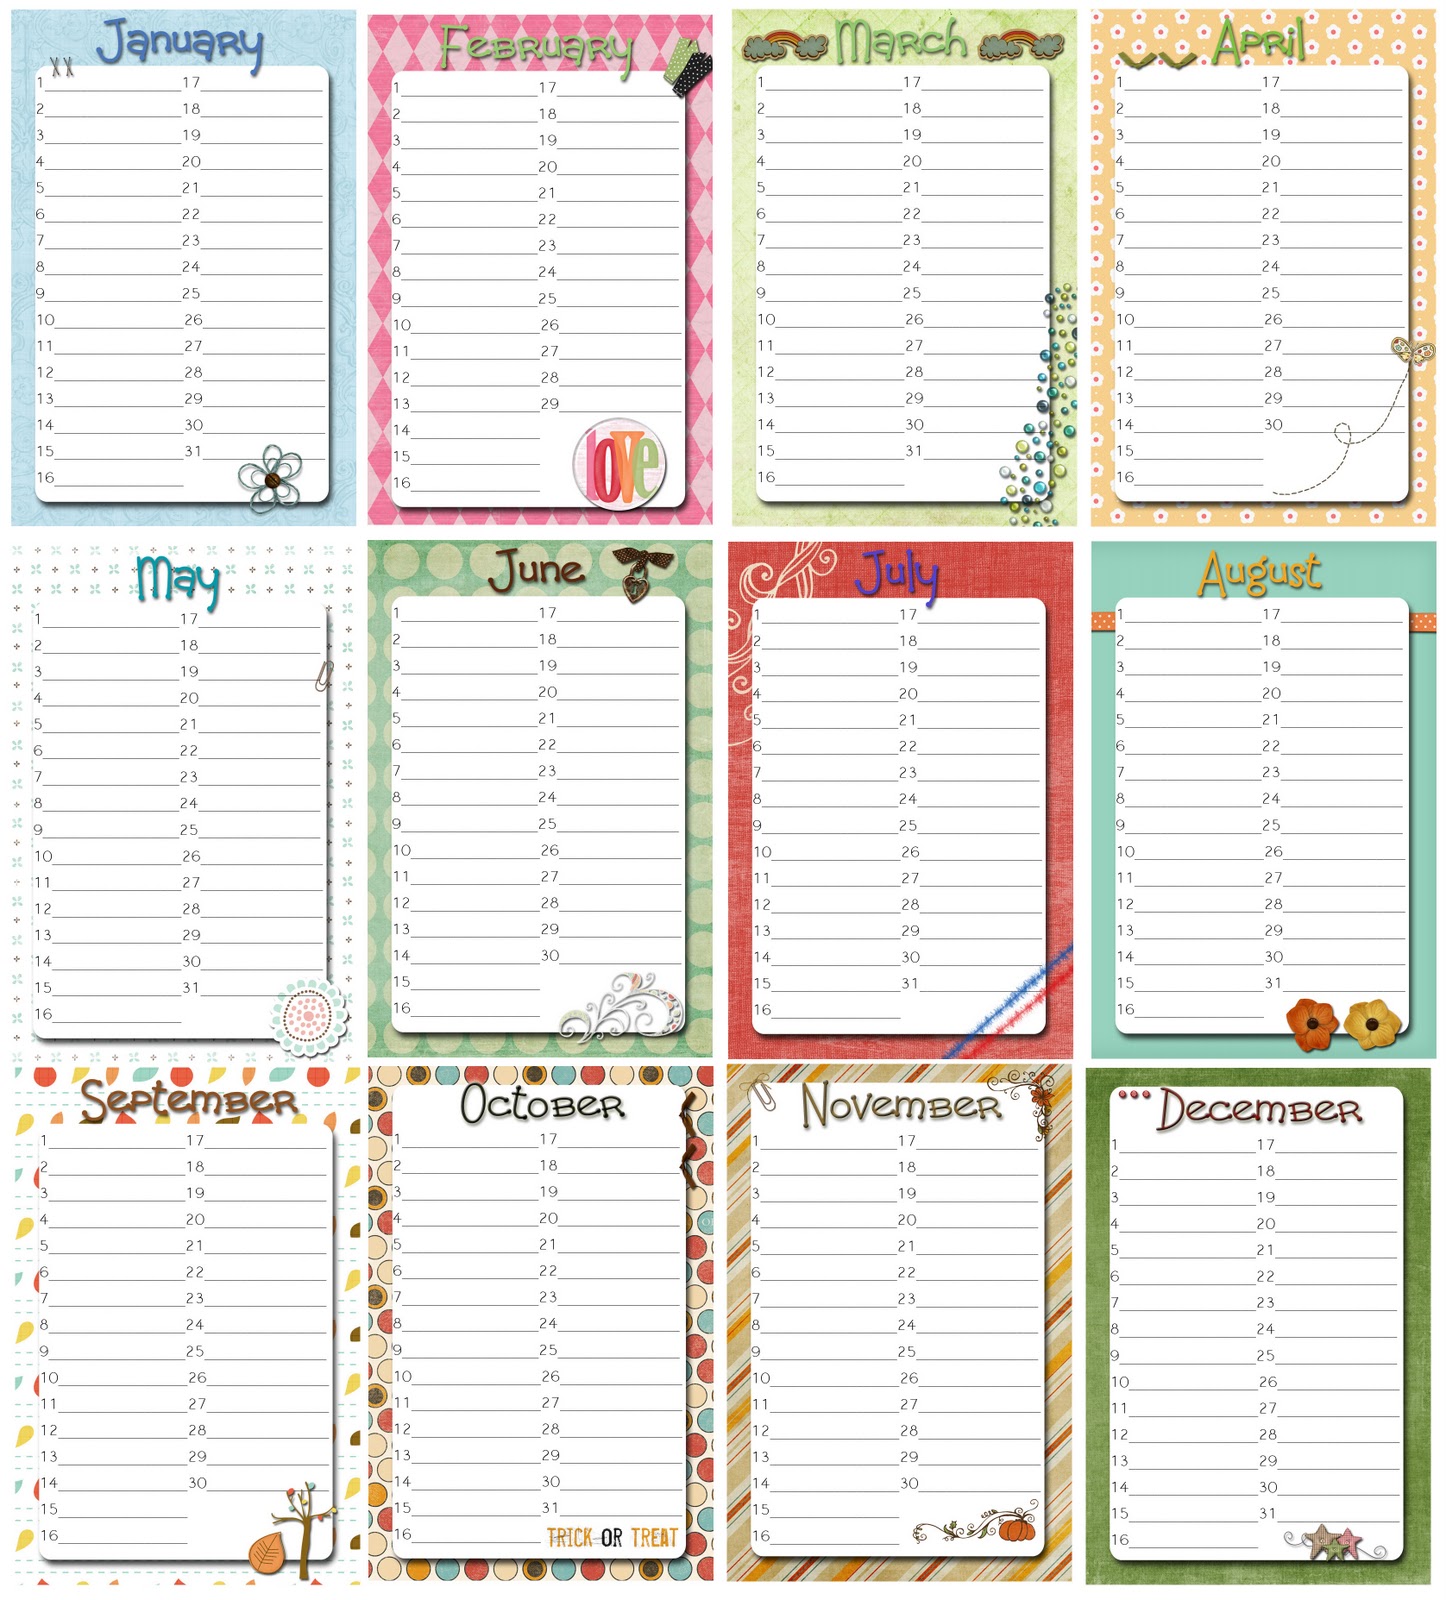 format-for-a-birthday-anniversary-calendar-template-calendar-design